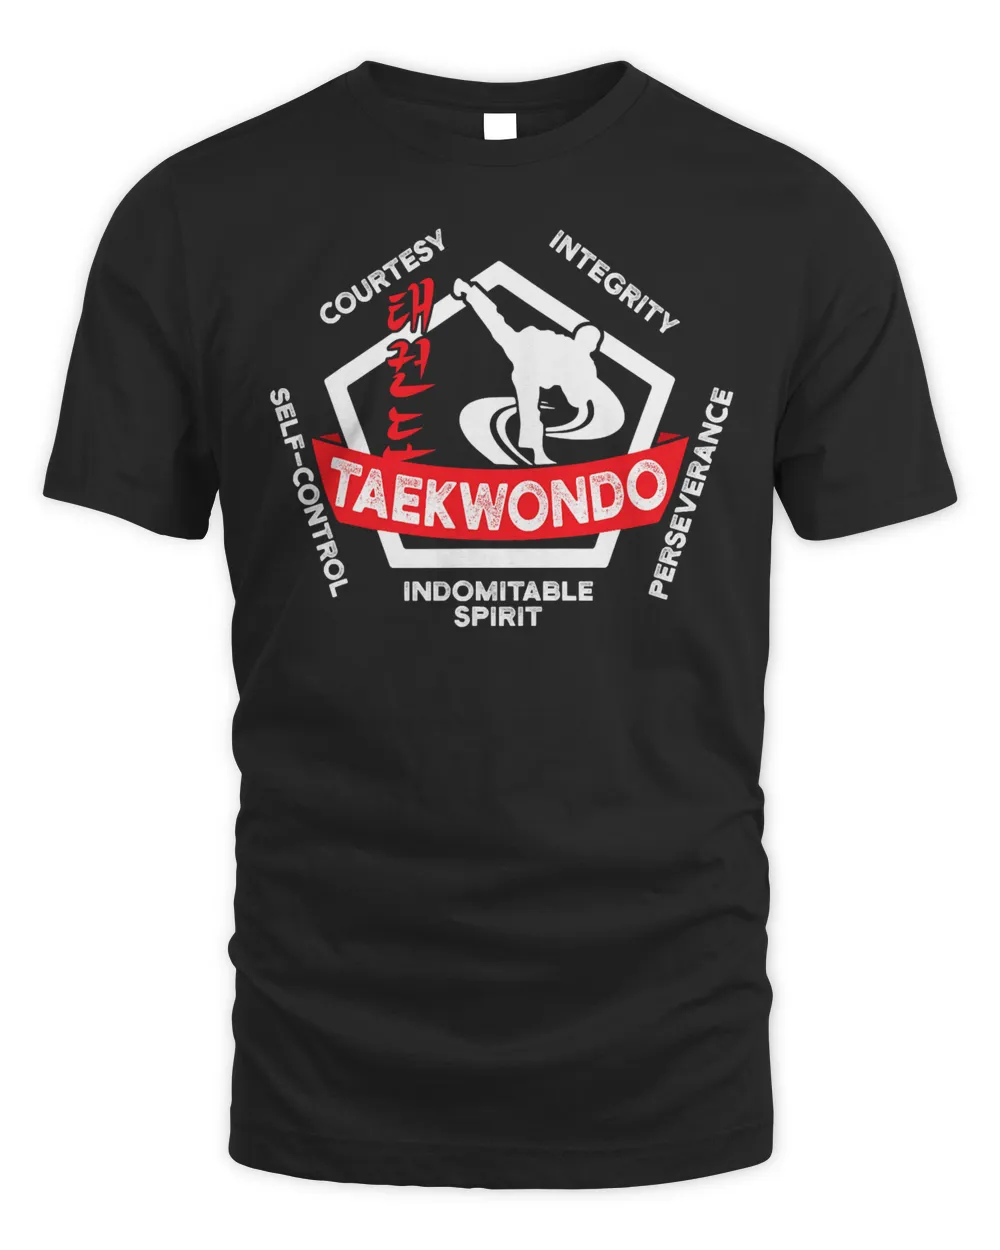 Taekwondo 5 Tenets Martial Arts ATA ITF Tae Kwon Do Gift T-Shirt